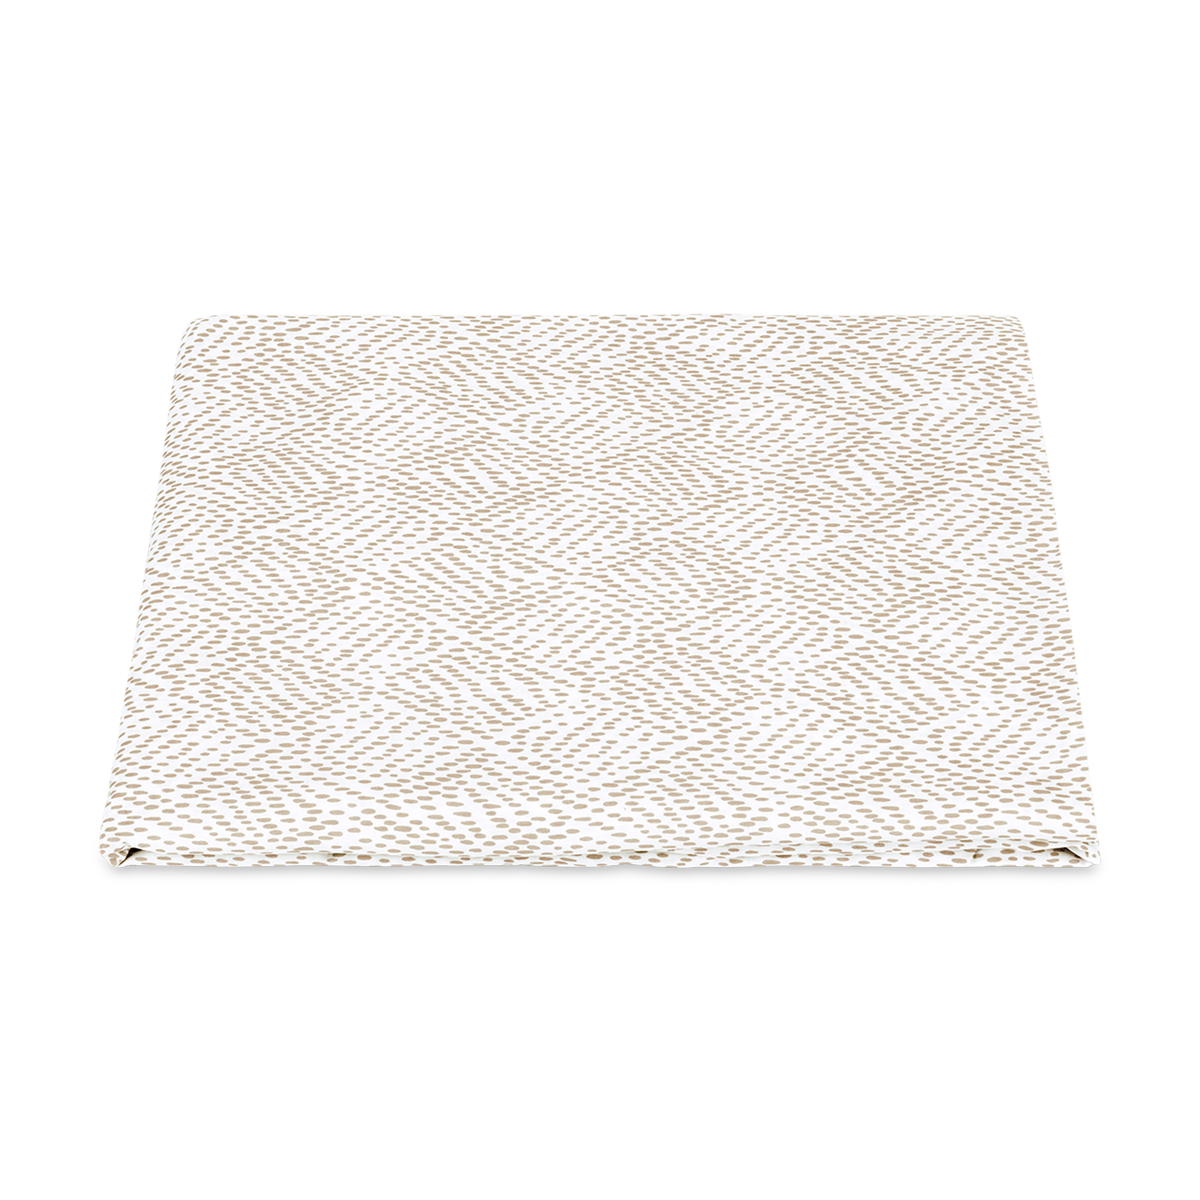 Folded Fitted Sheet of Matouk Duma Diamond Bedding in Dune Color